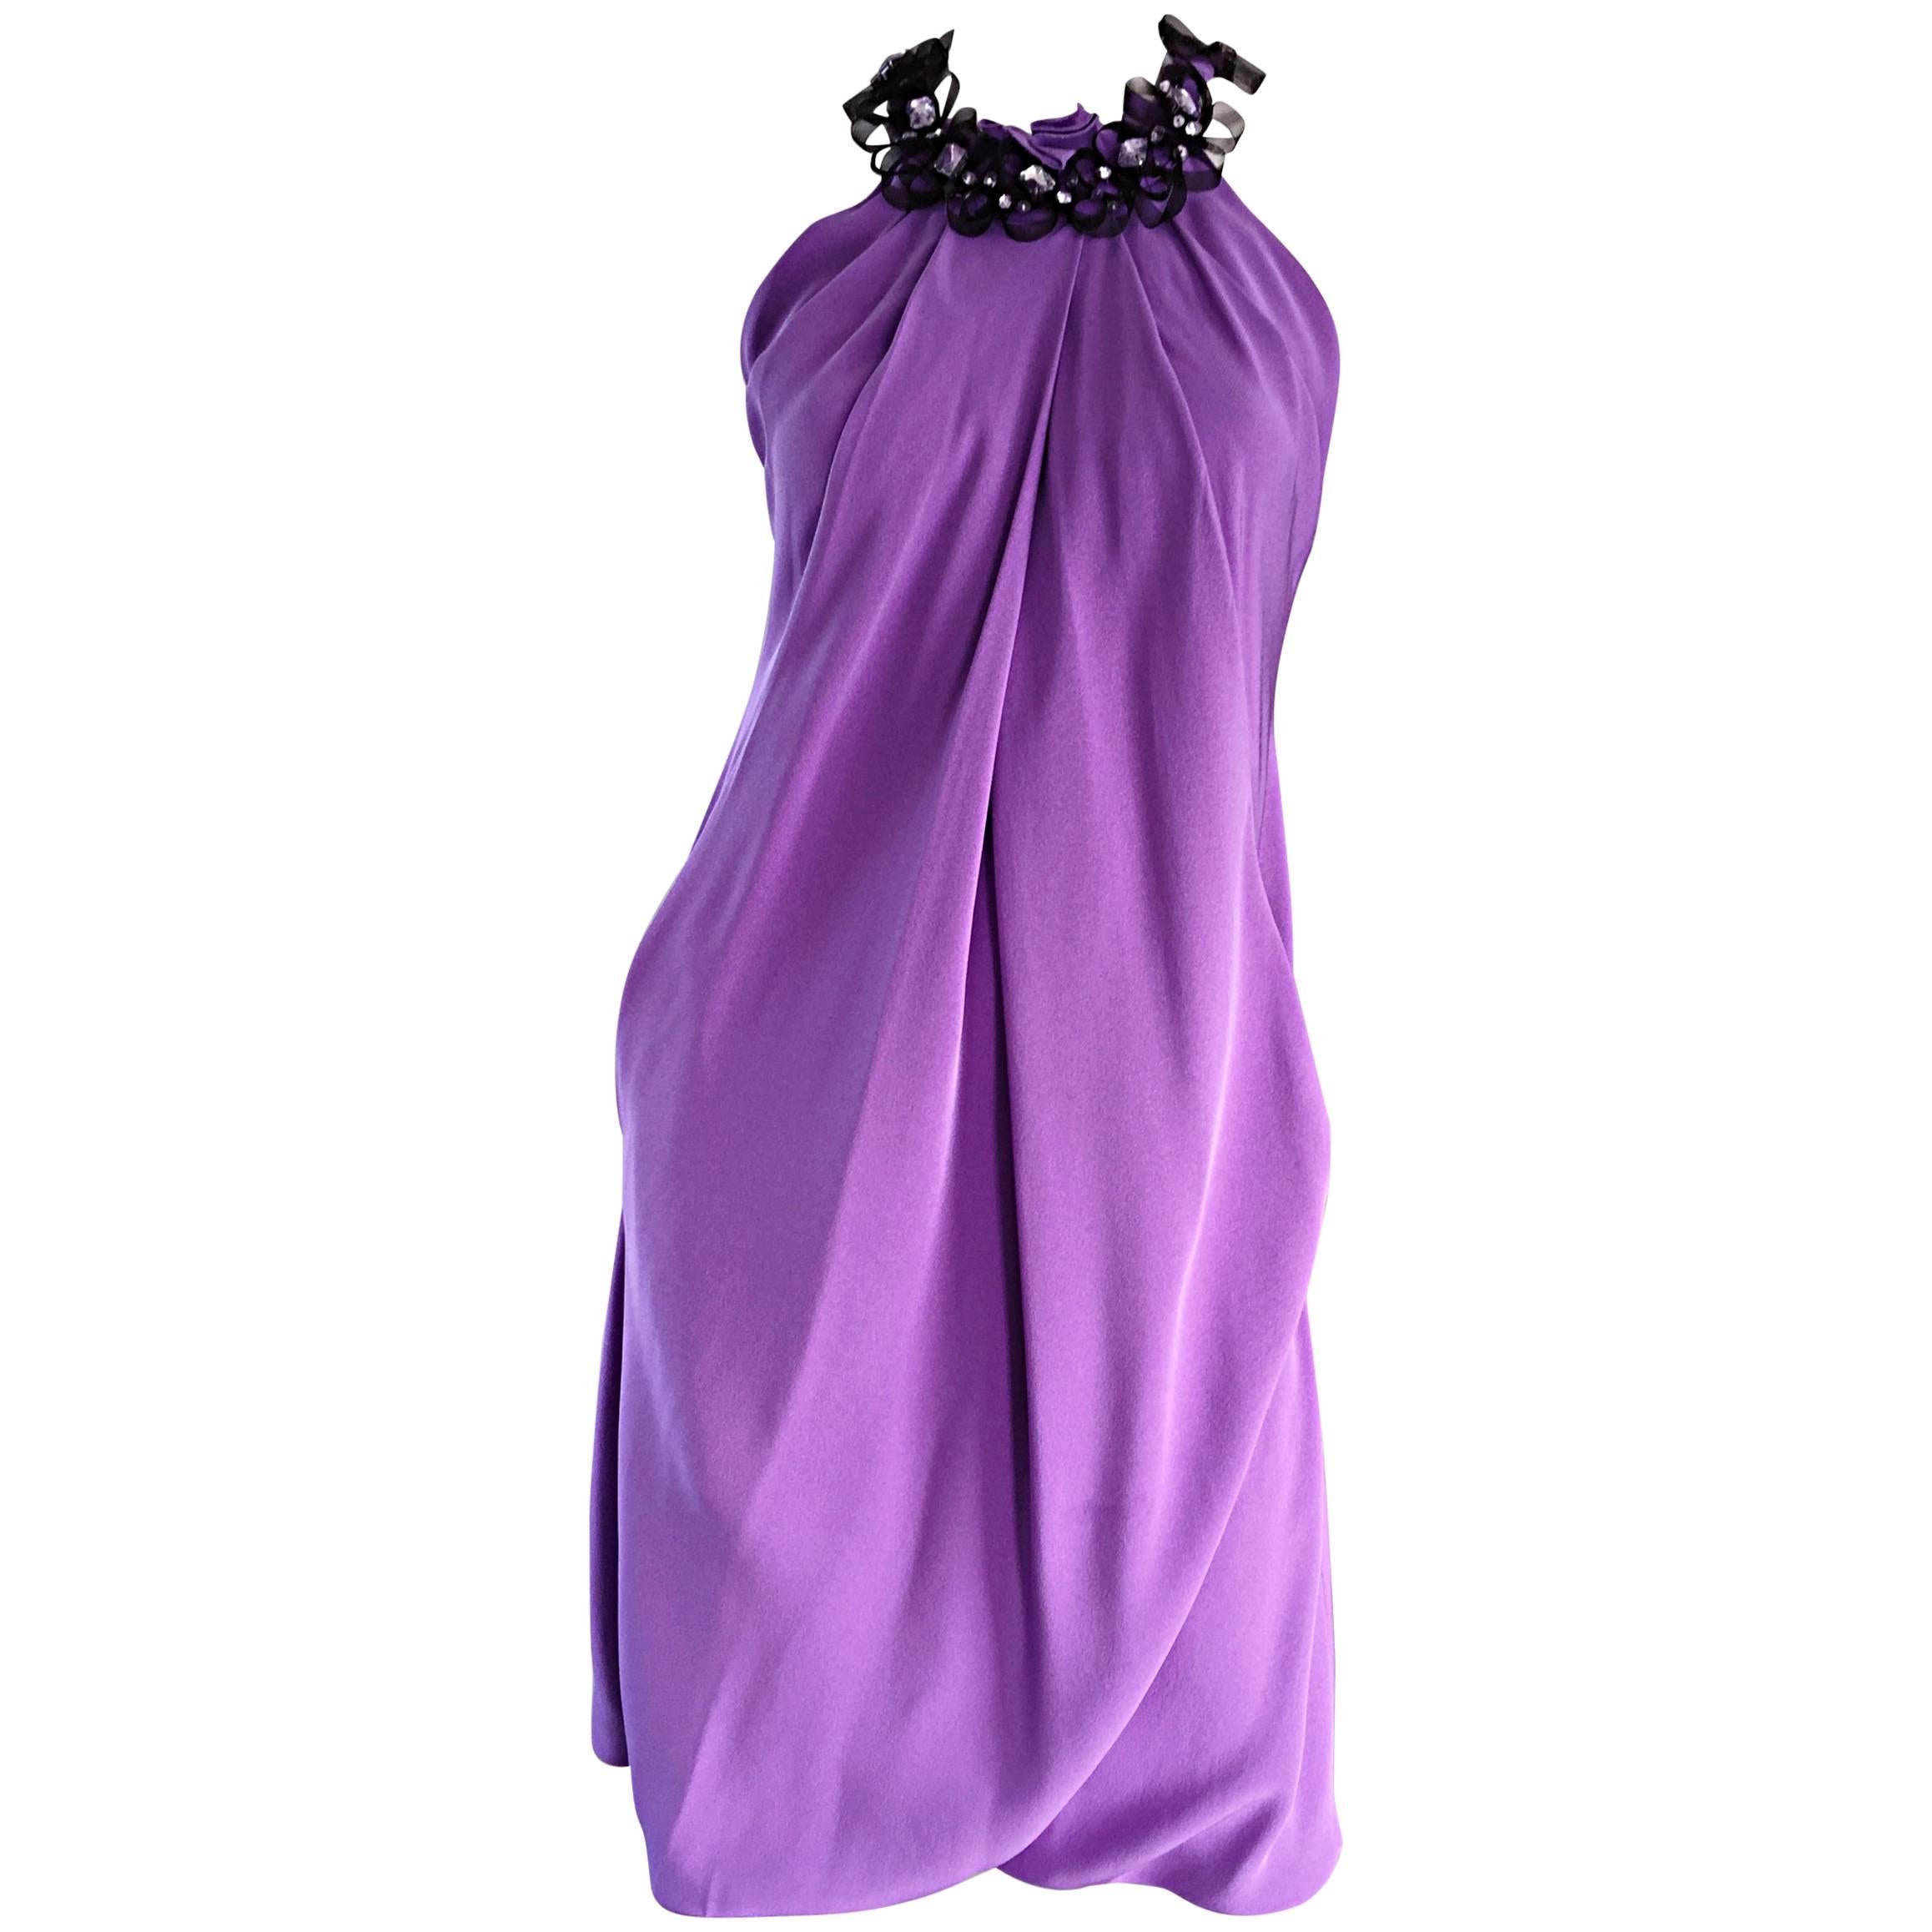 Chic Pamella Roland Light Purple Lilac Beaded Bib Collar Bubble Grecian Dress